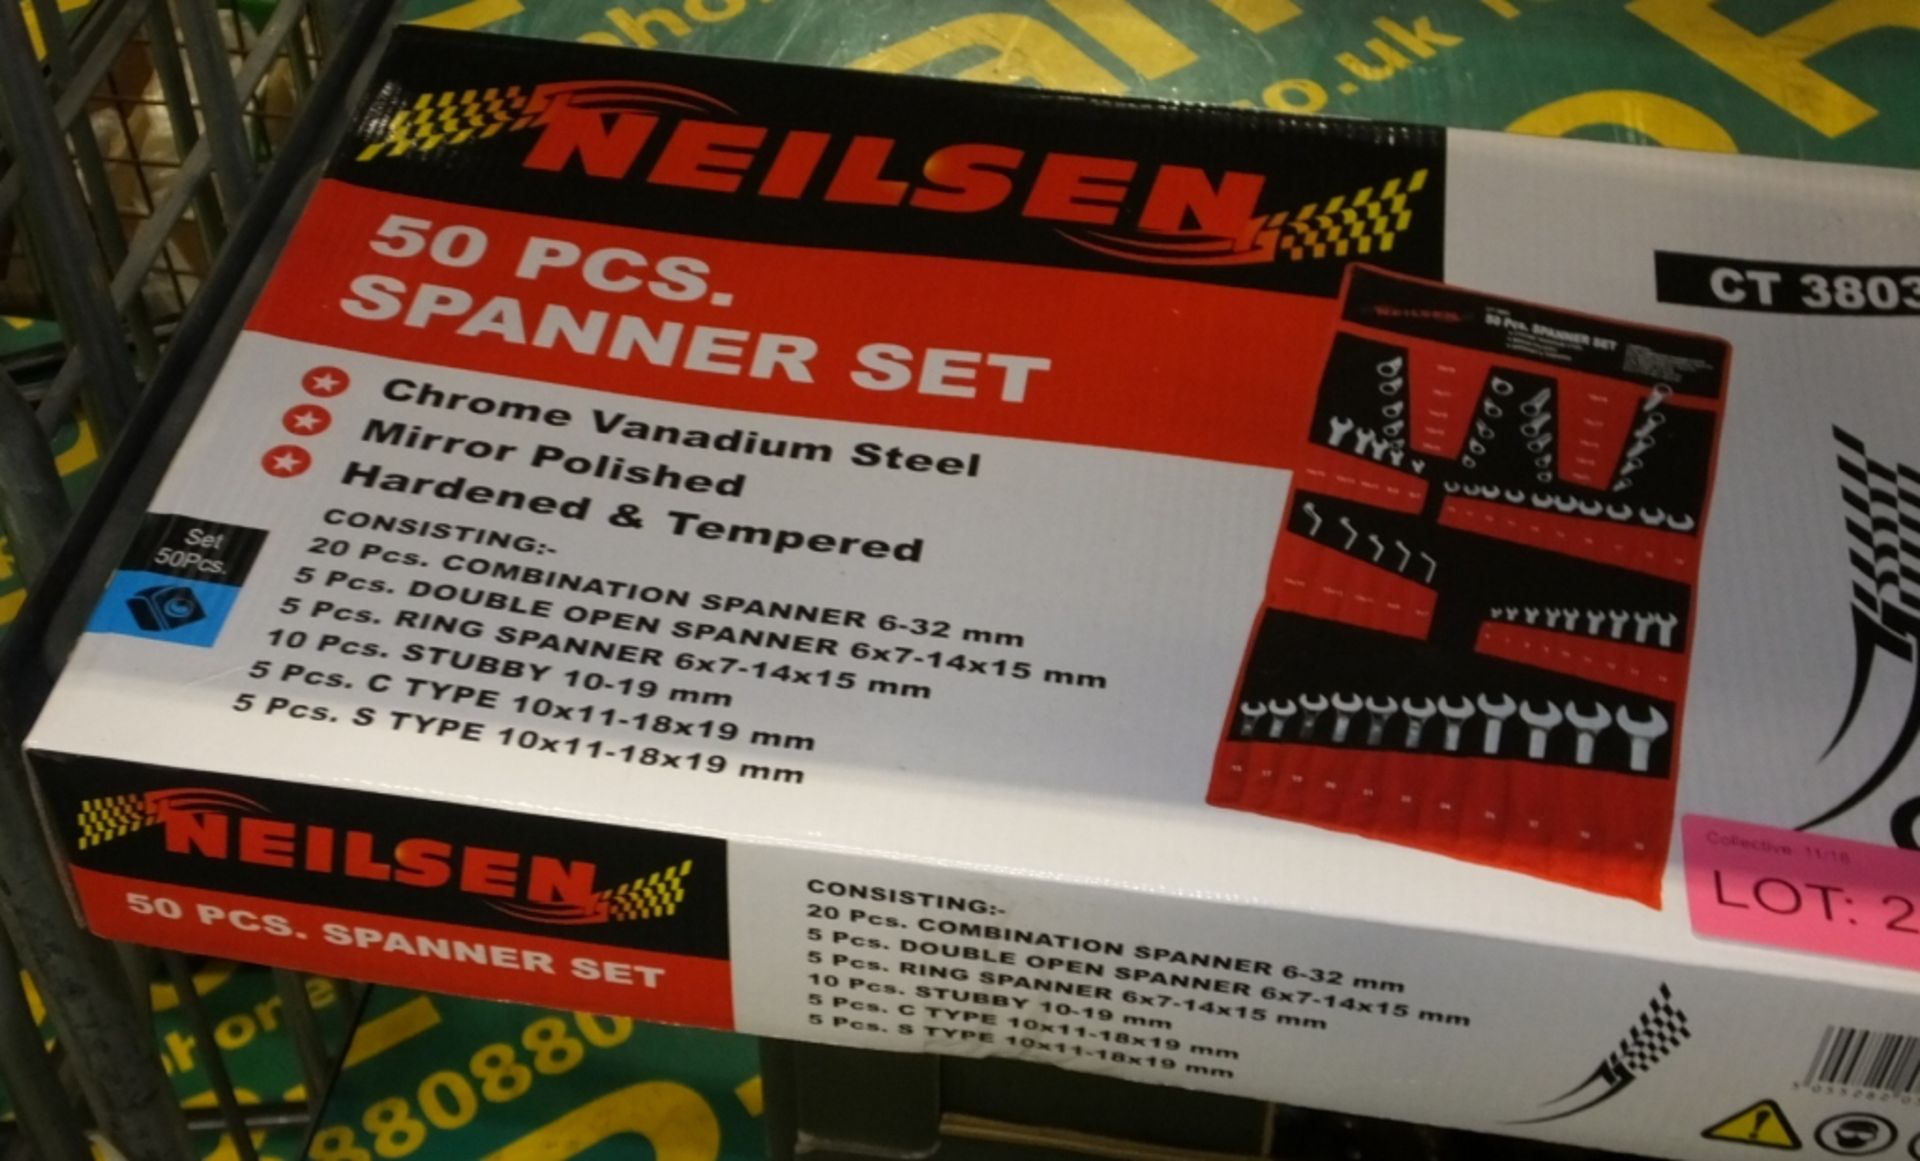 Neilsen 50 pcs Spanner set - CT 3803 - Image 2 of 2